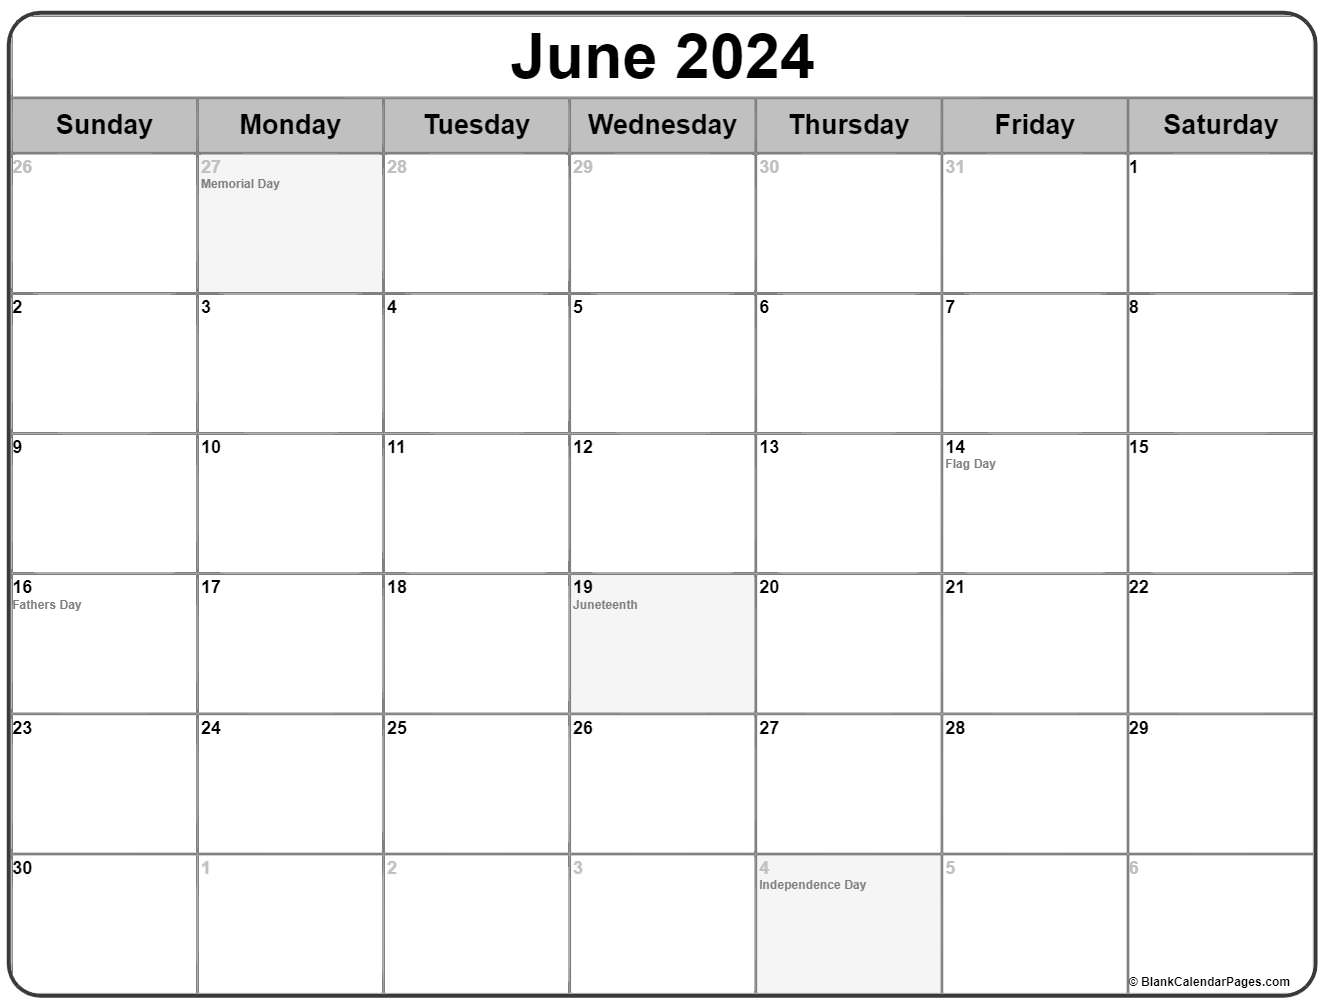 Victorian Public Holidays 2023 Calendar Calendar 2023 With Federal